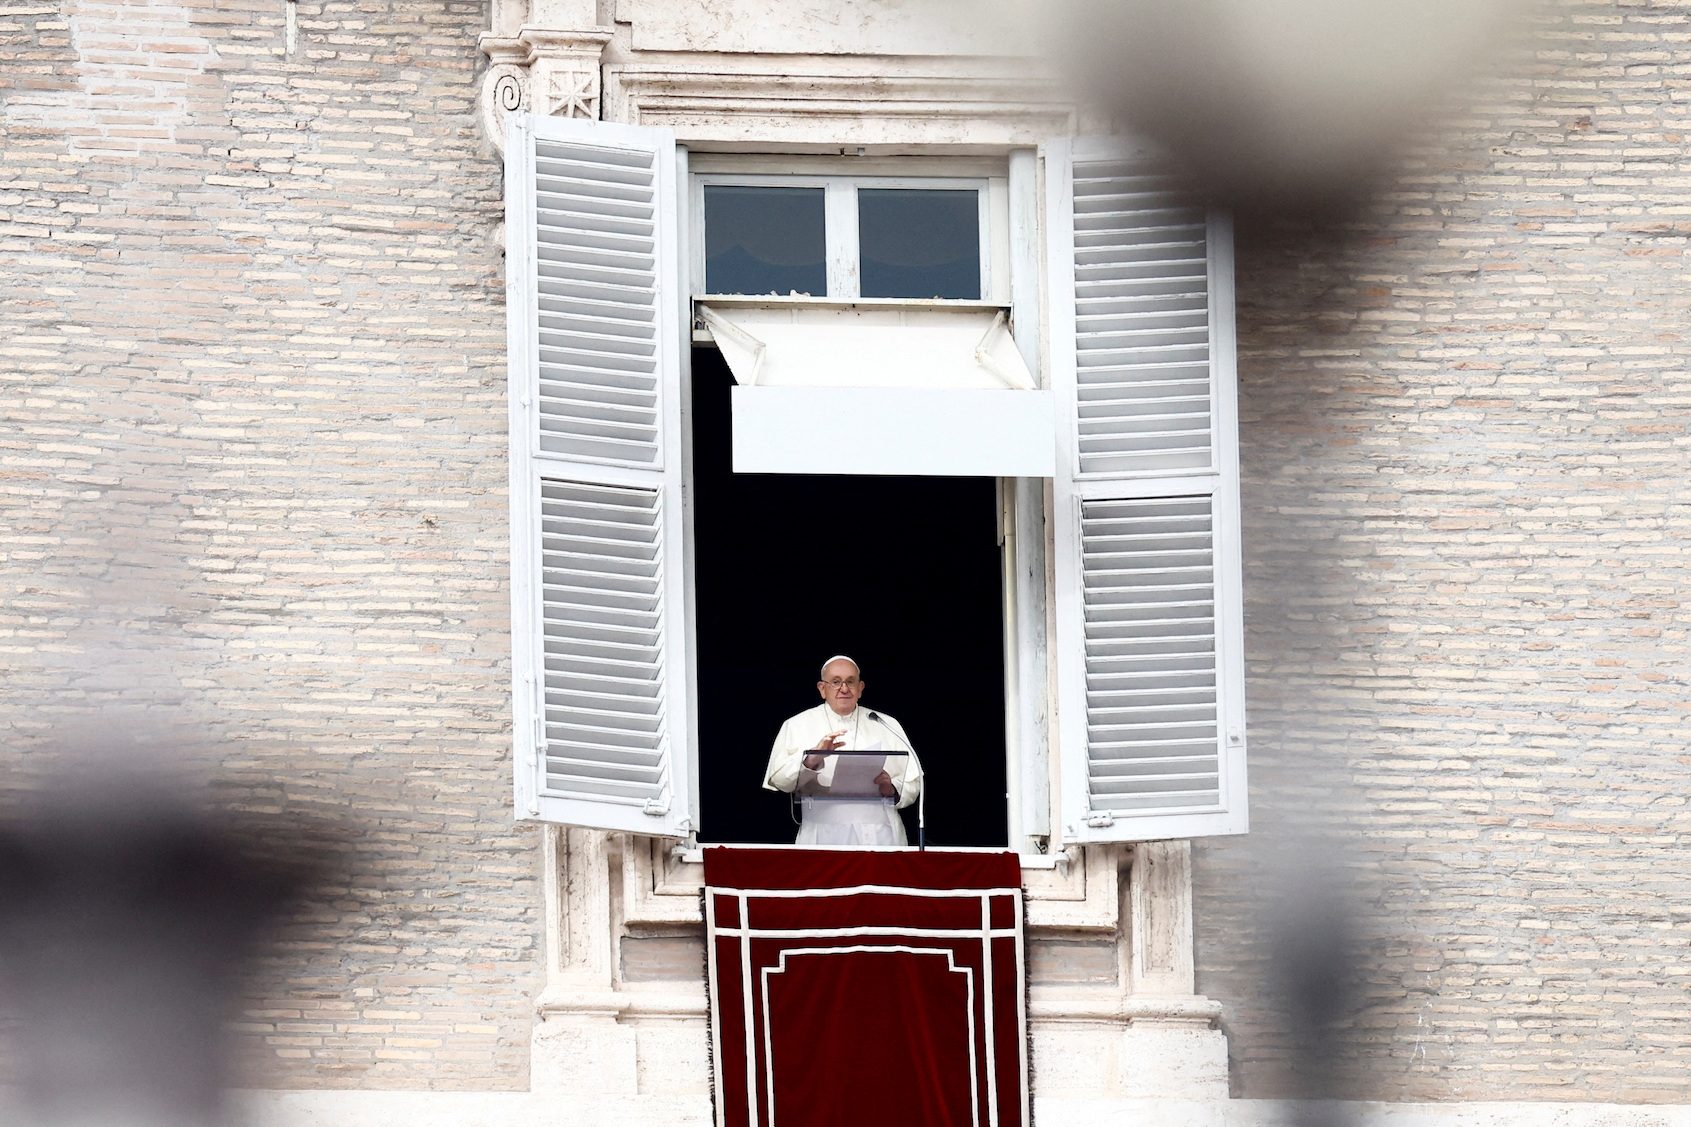 Vatican approves blessings for same-sex couples in landmark ruling